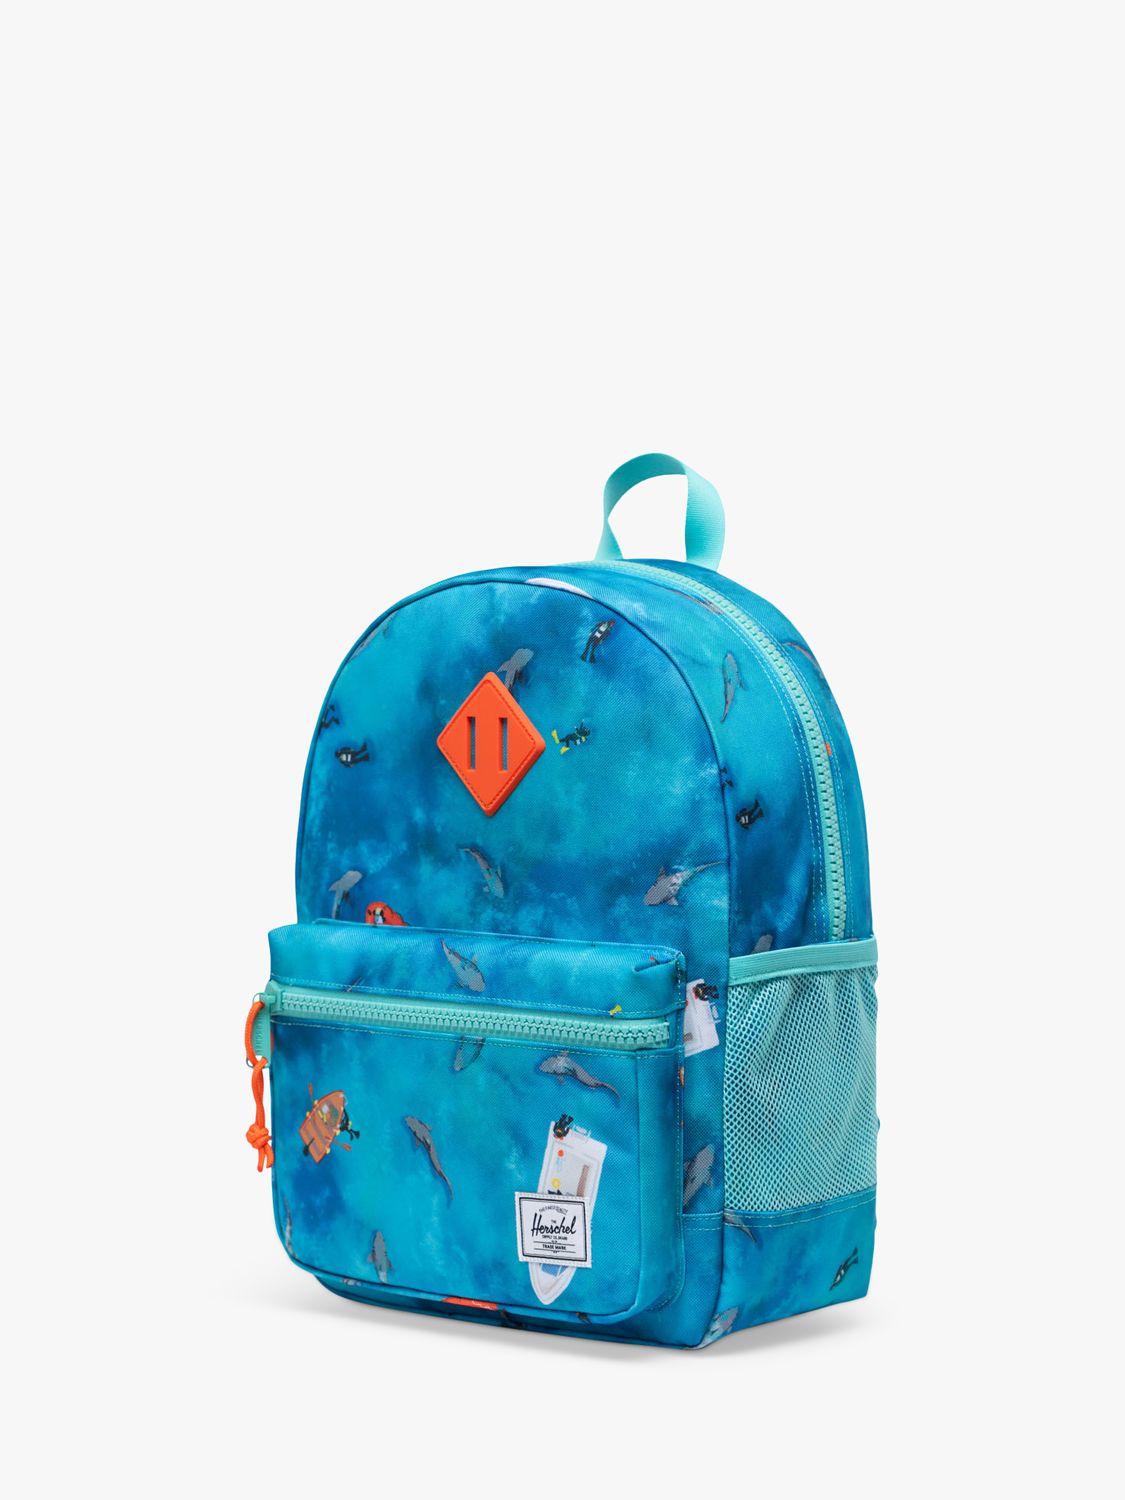 Herschel Supply Co. Kids' Shark Print Backpack, Blue/Multi